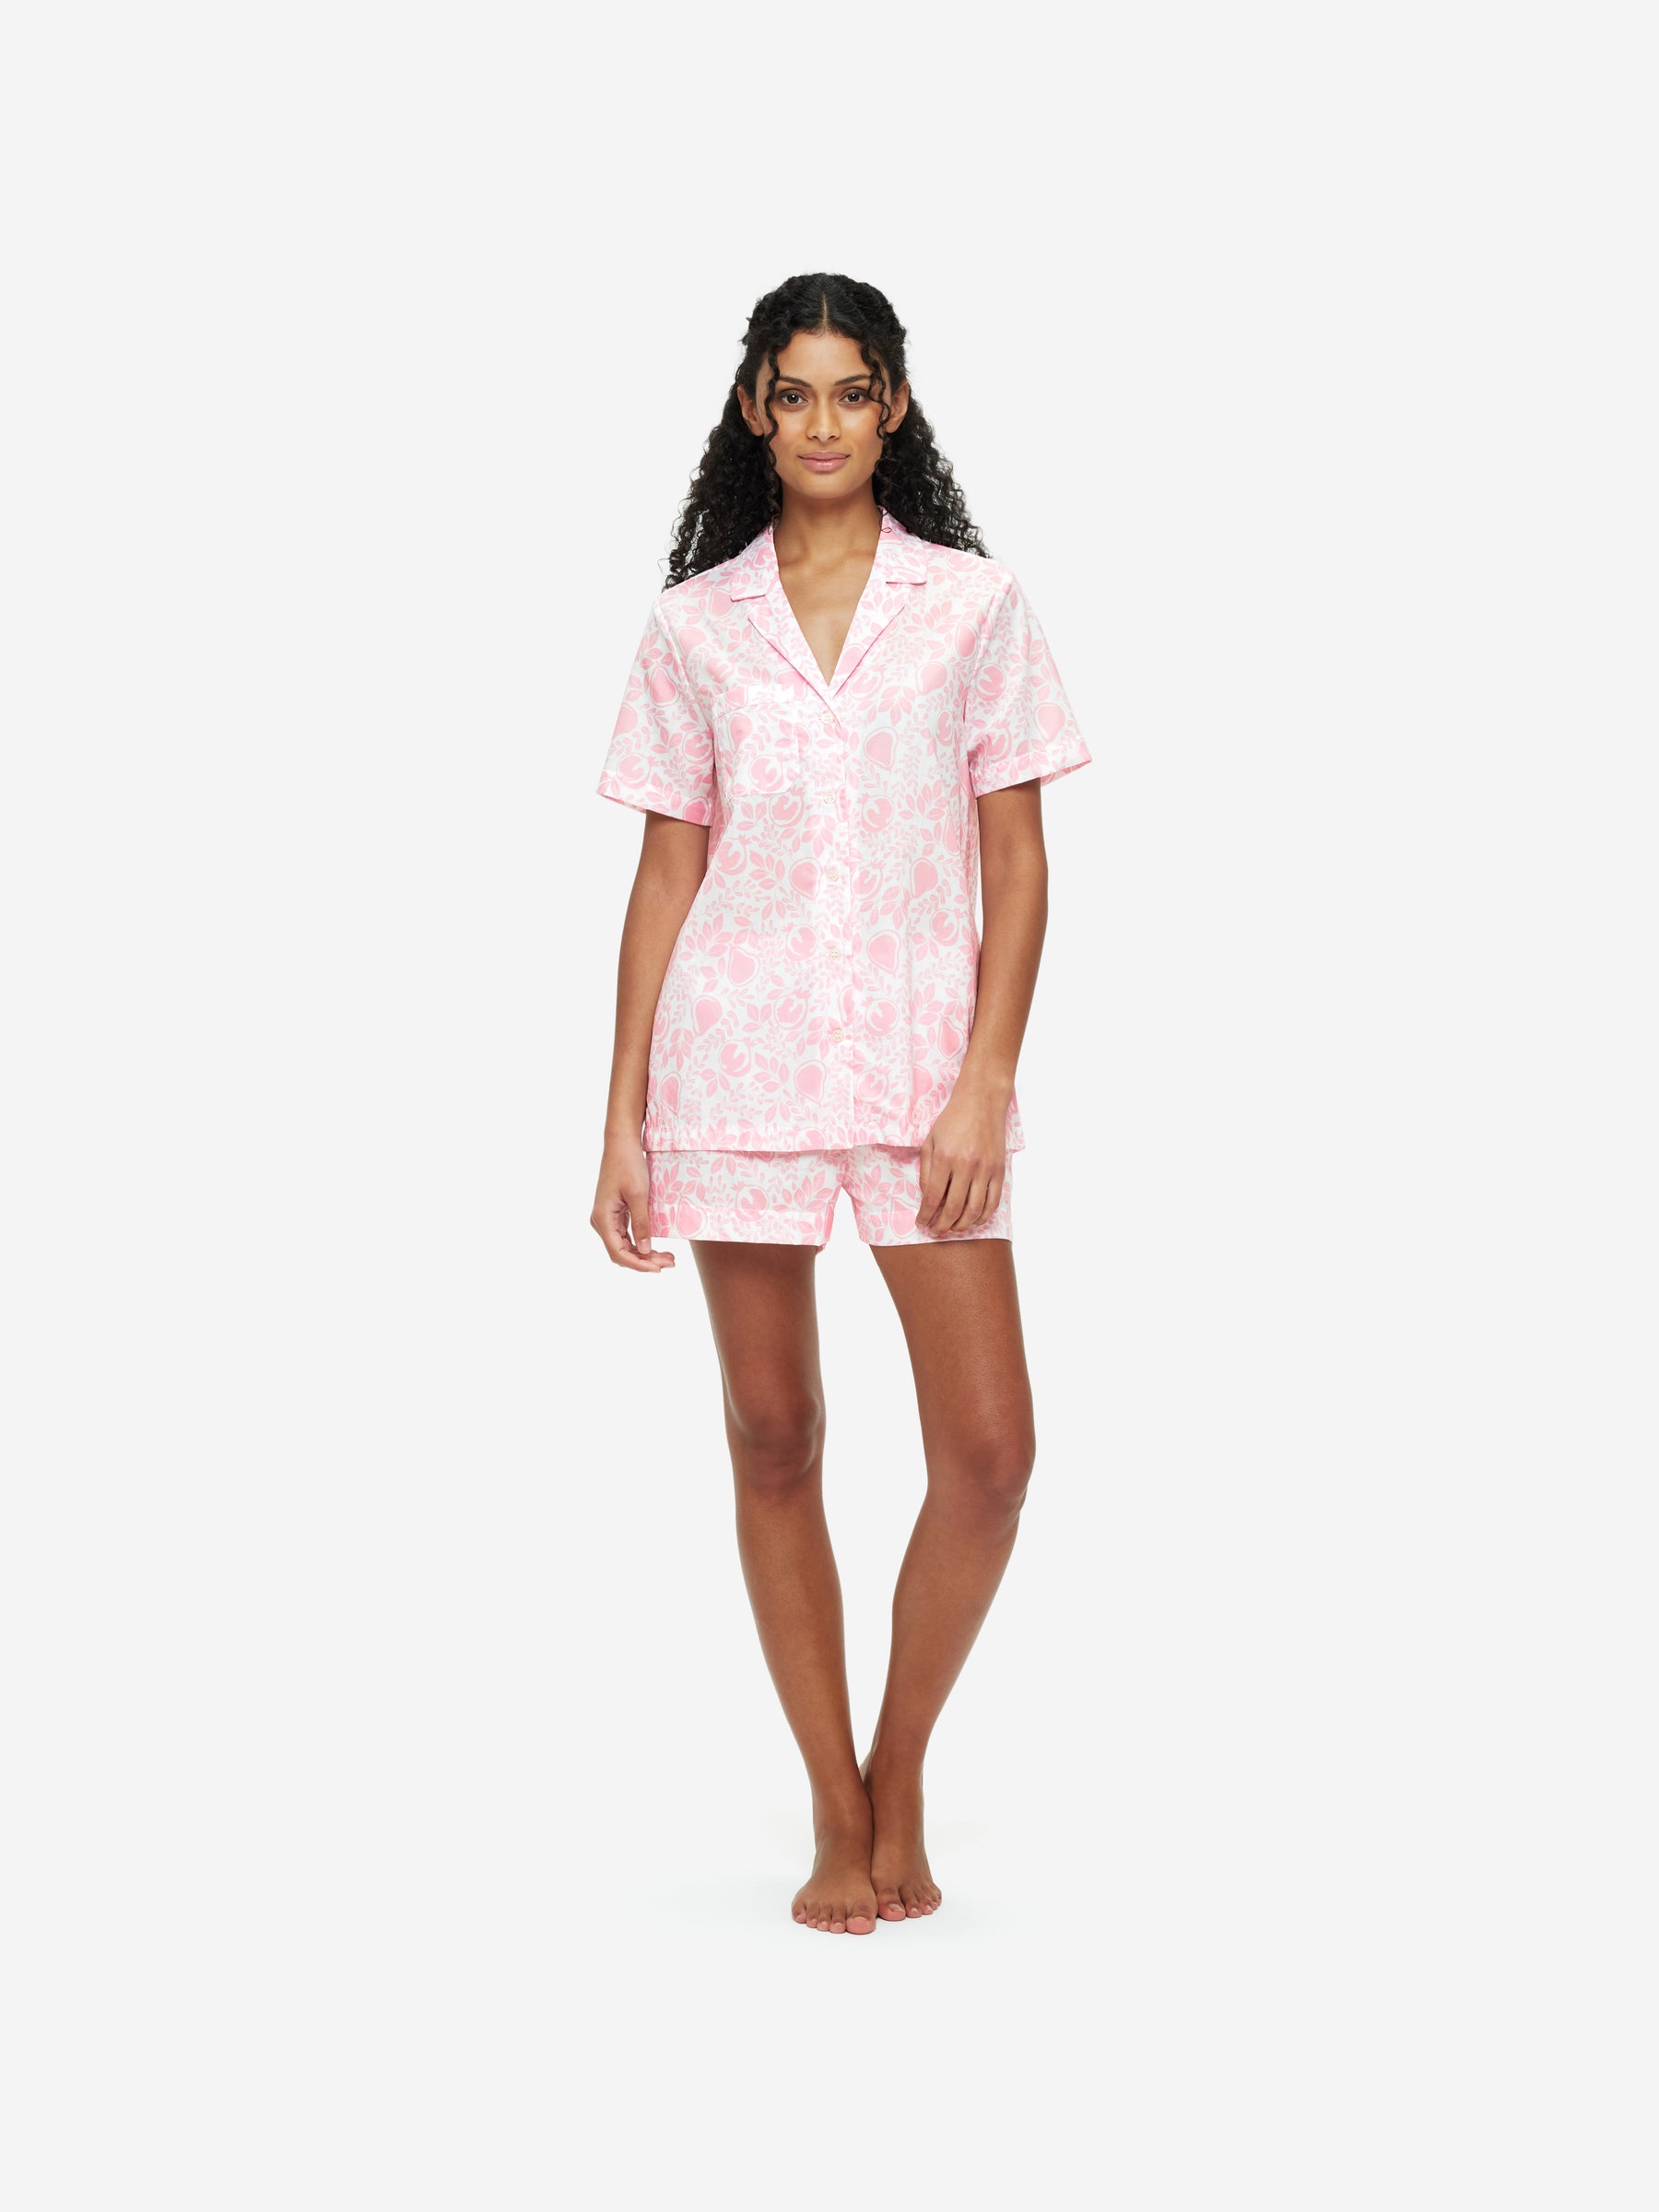 Women's Short Pyjamas Nelson 89 Cotton Batiste Pink